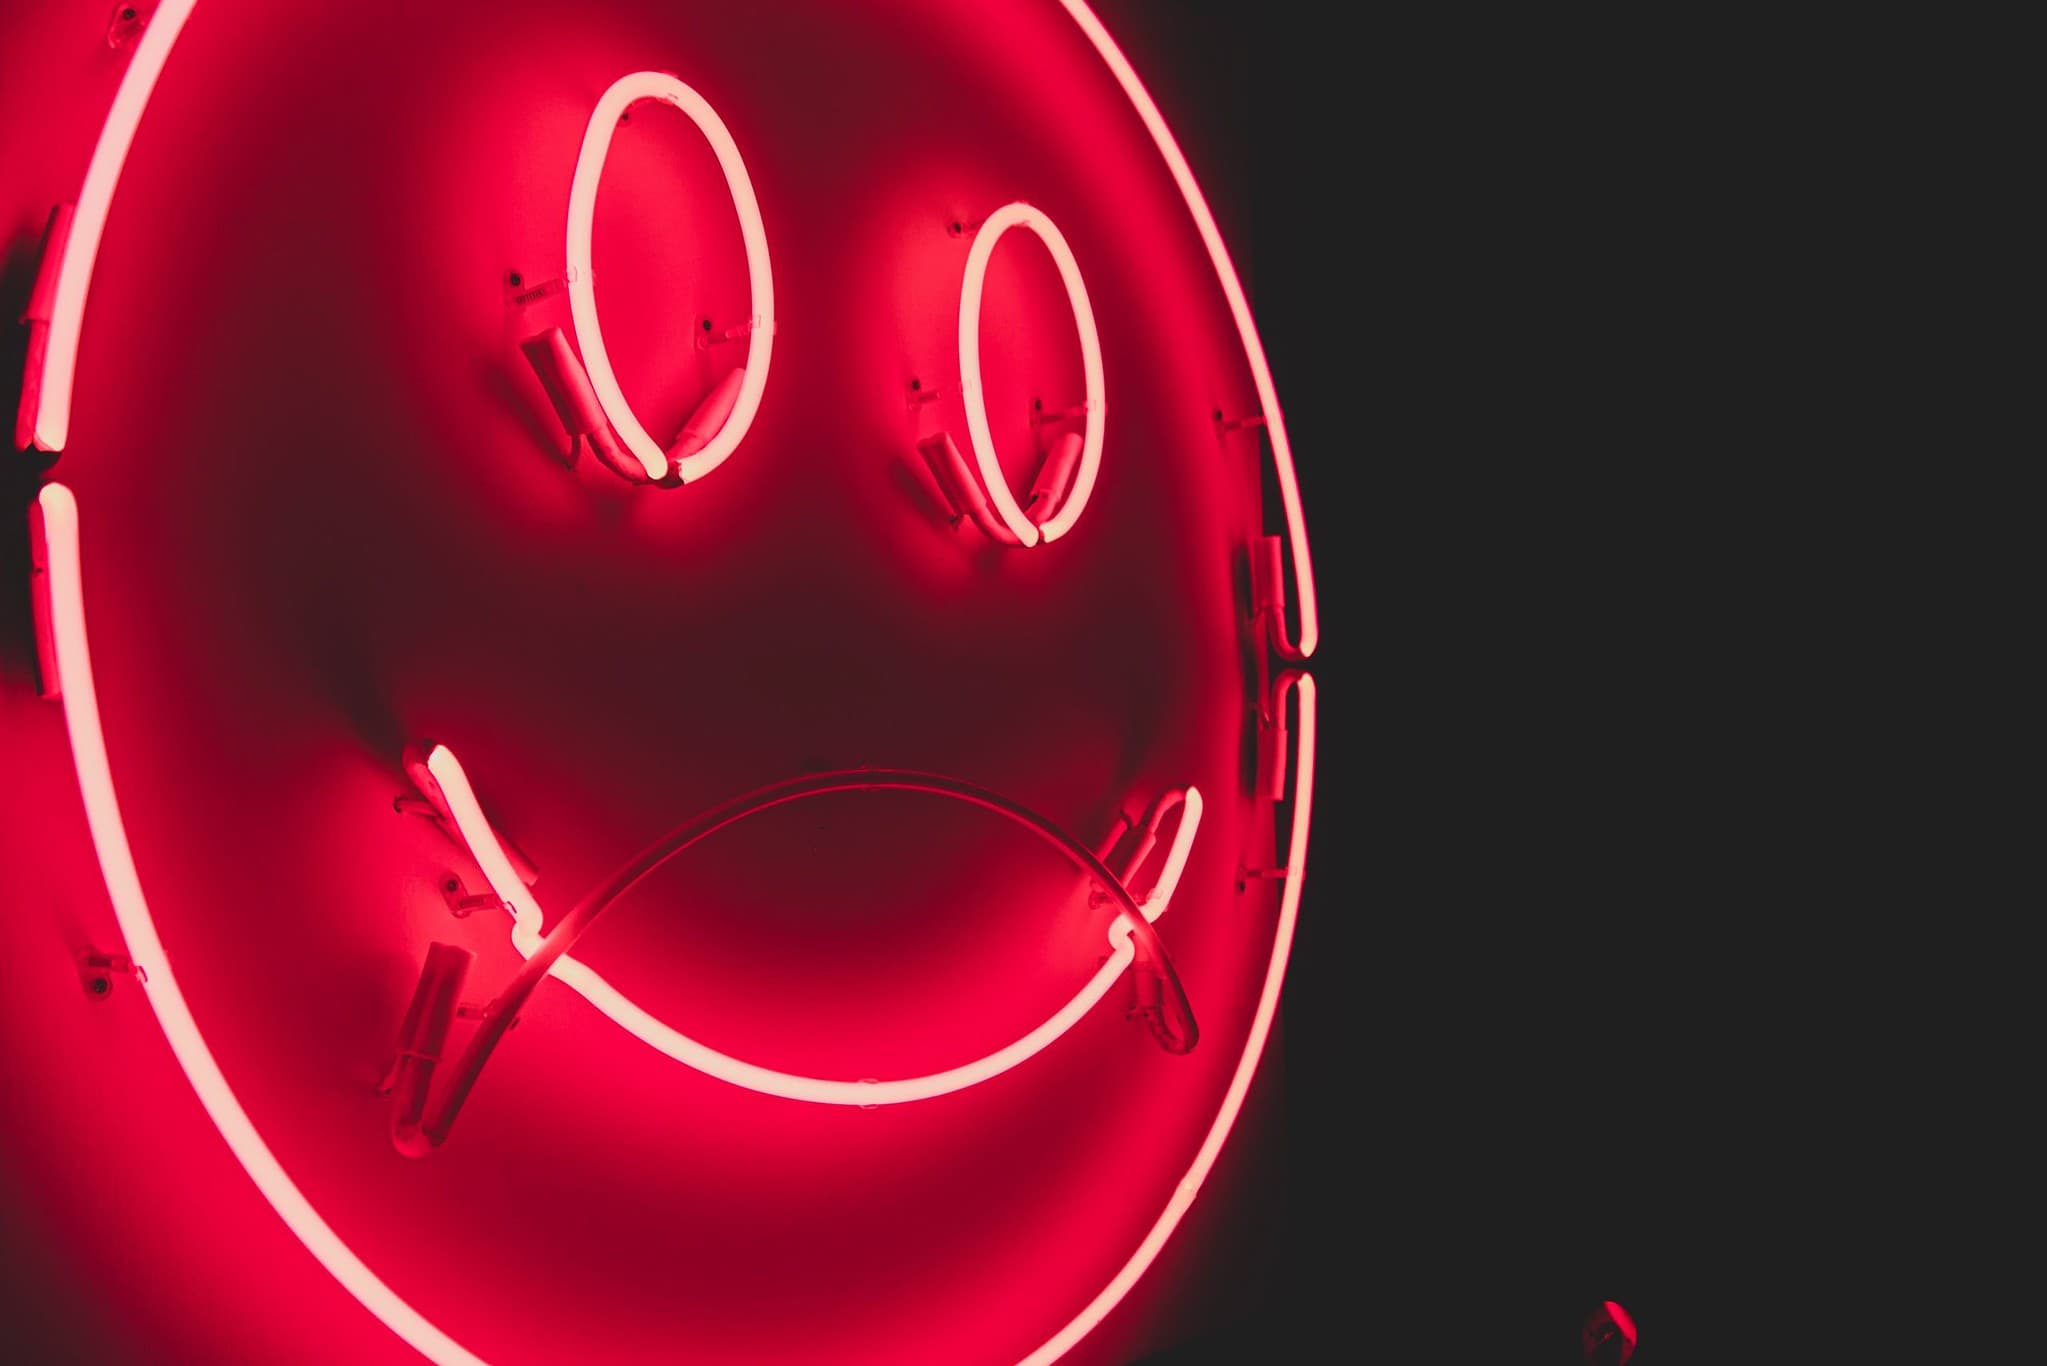 smiley face neon sign